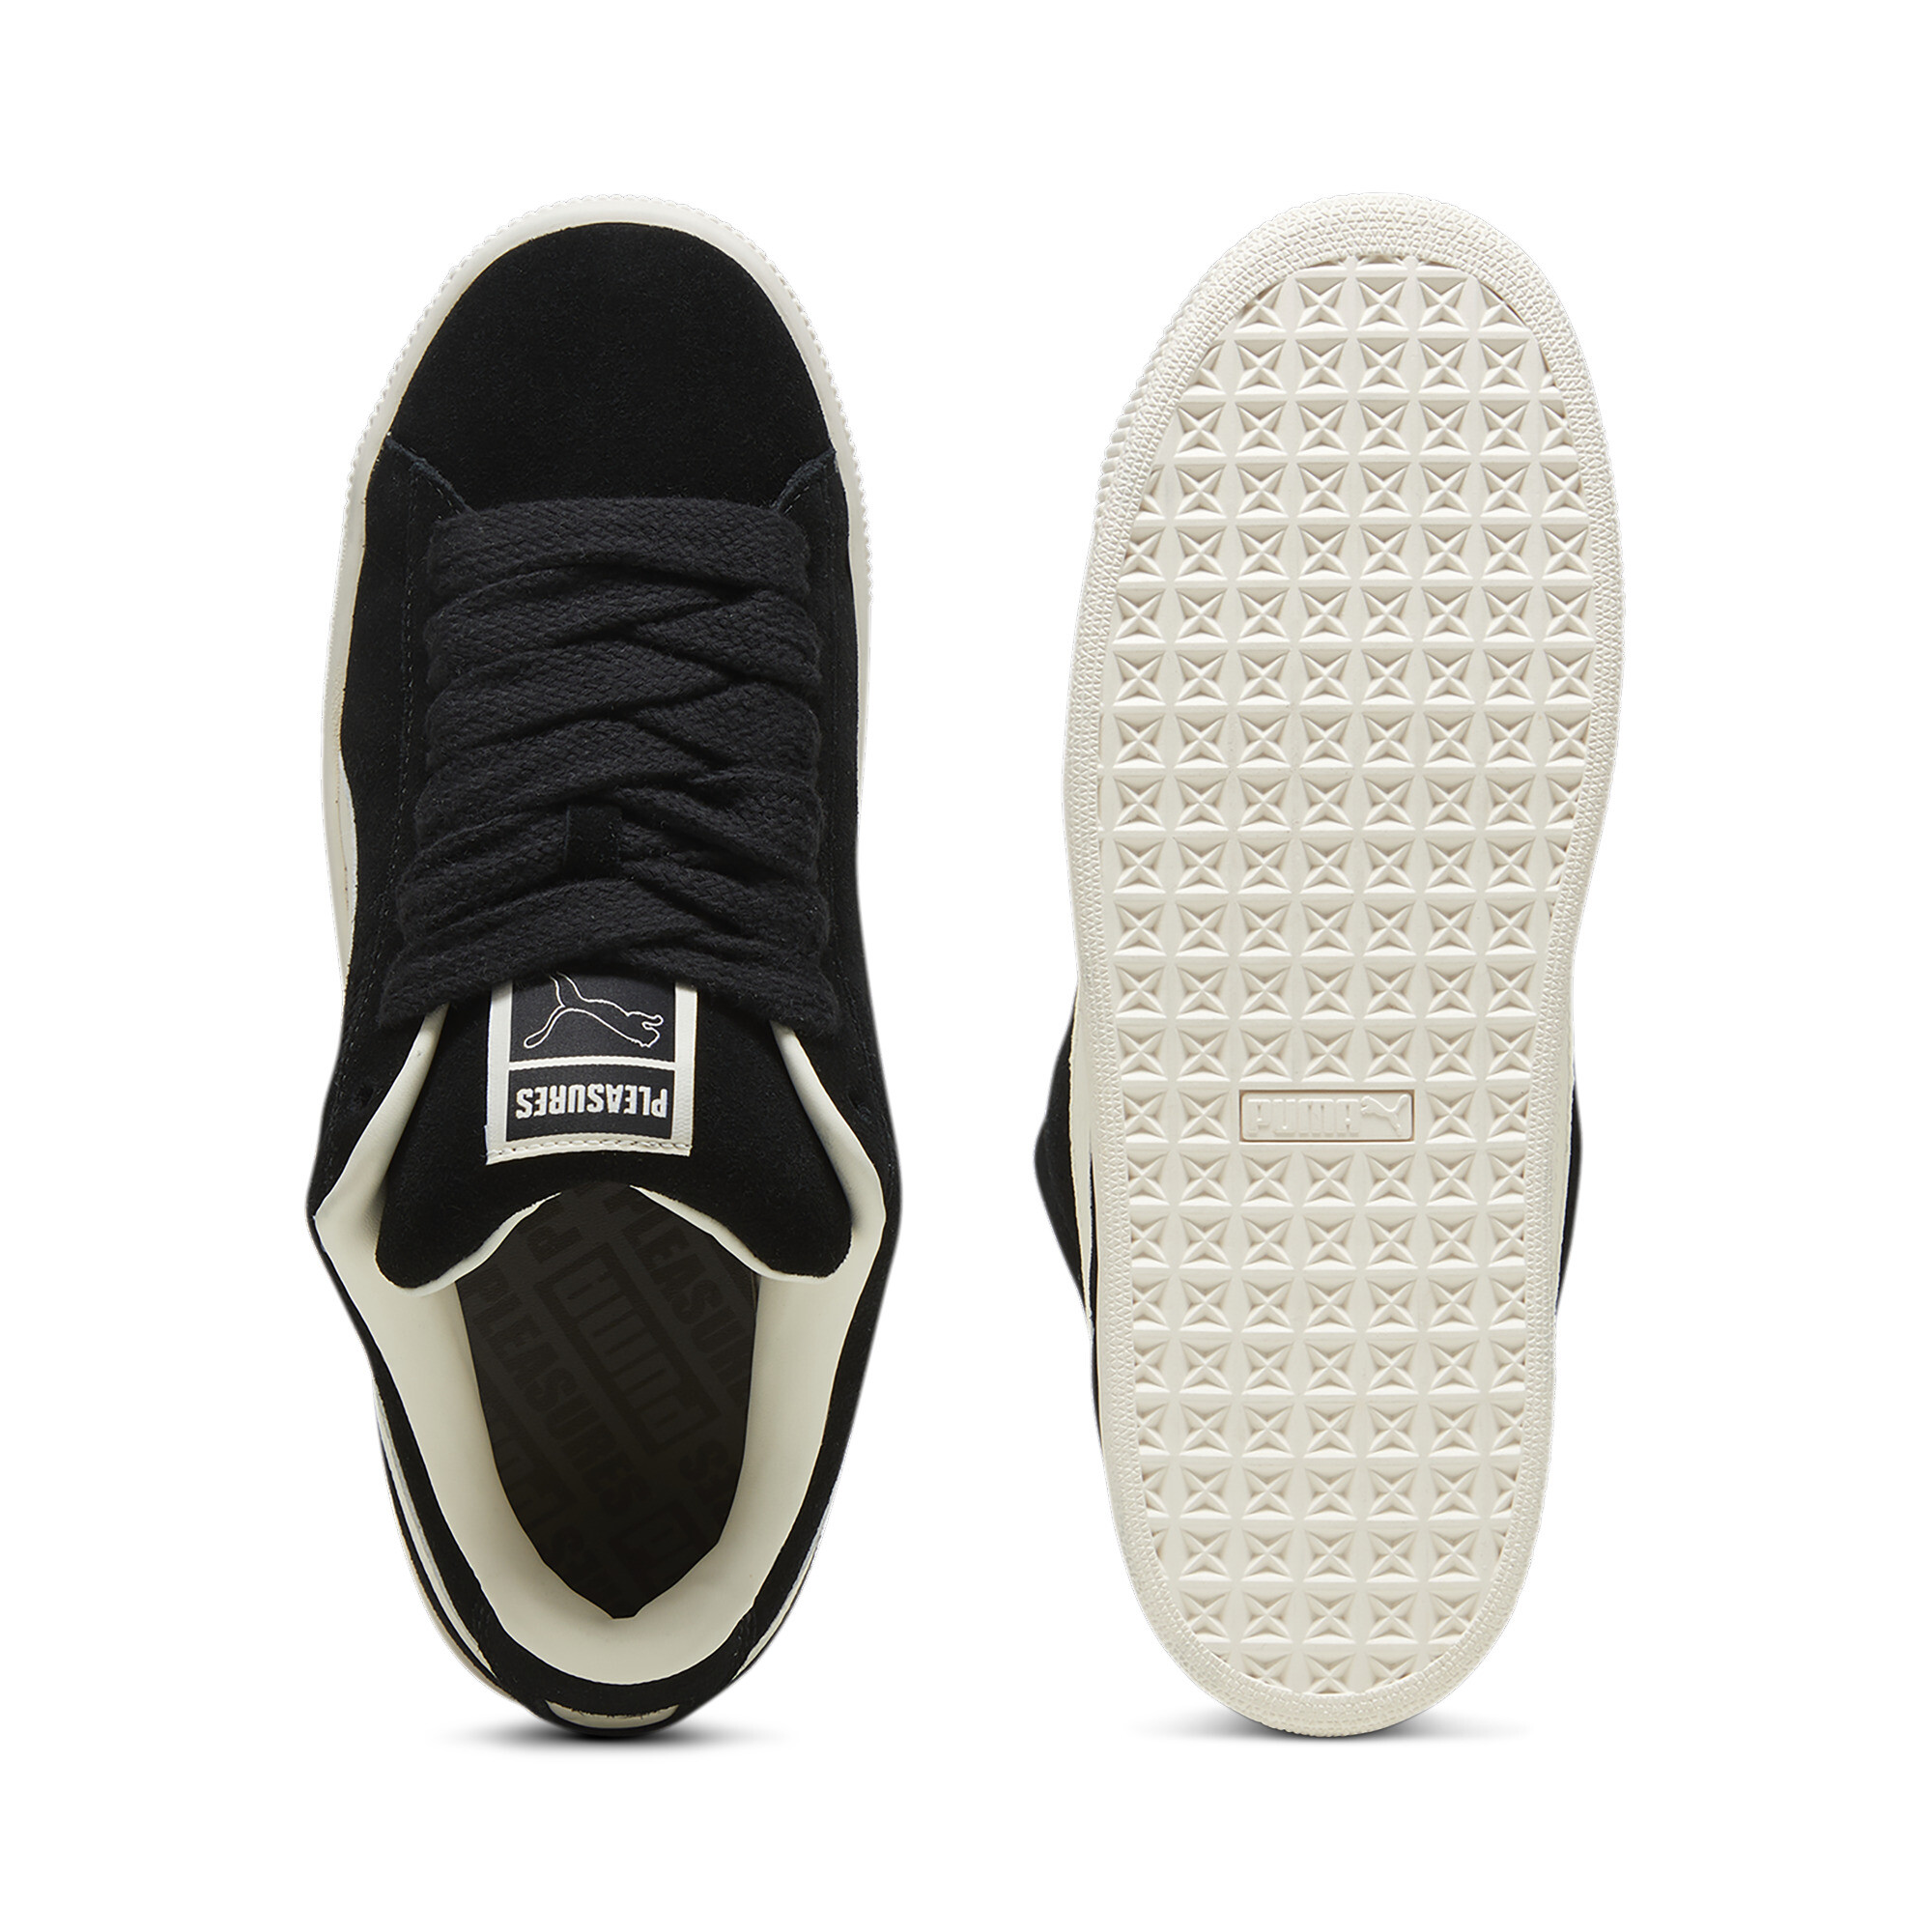 Men's PUMA X PLEASURES Suede XL Sneakers In Black, Size EU 44.5